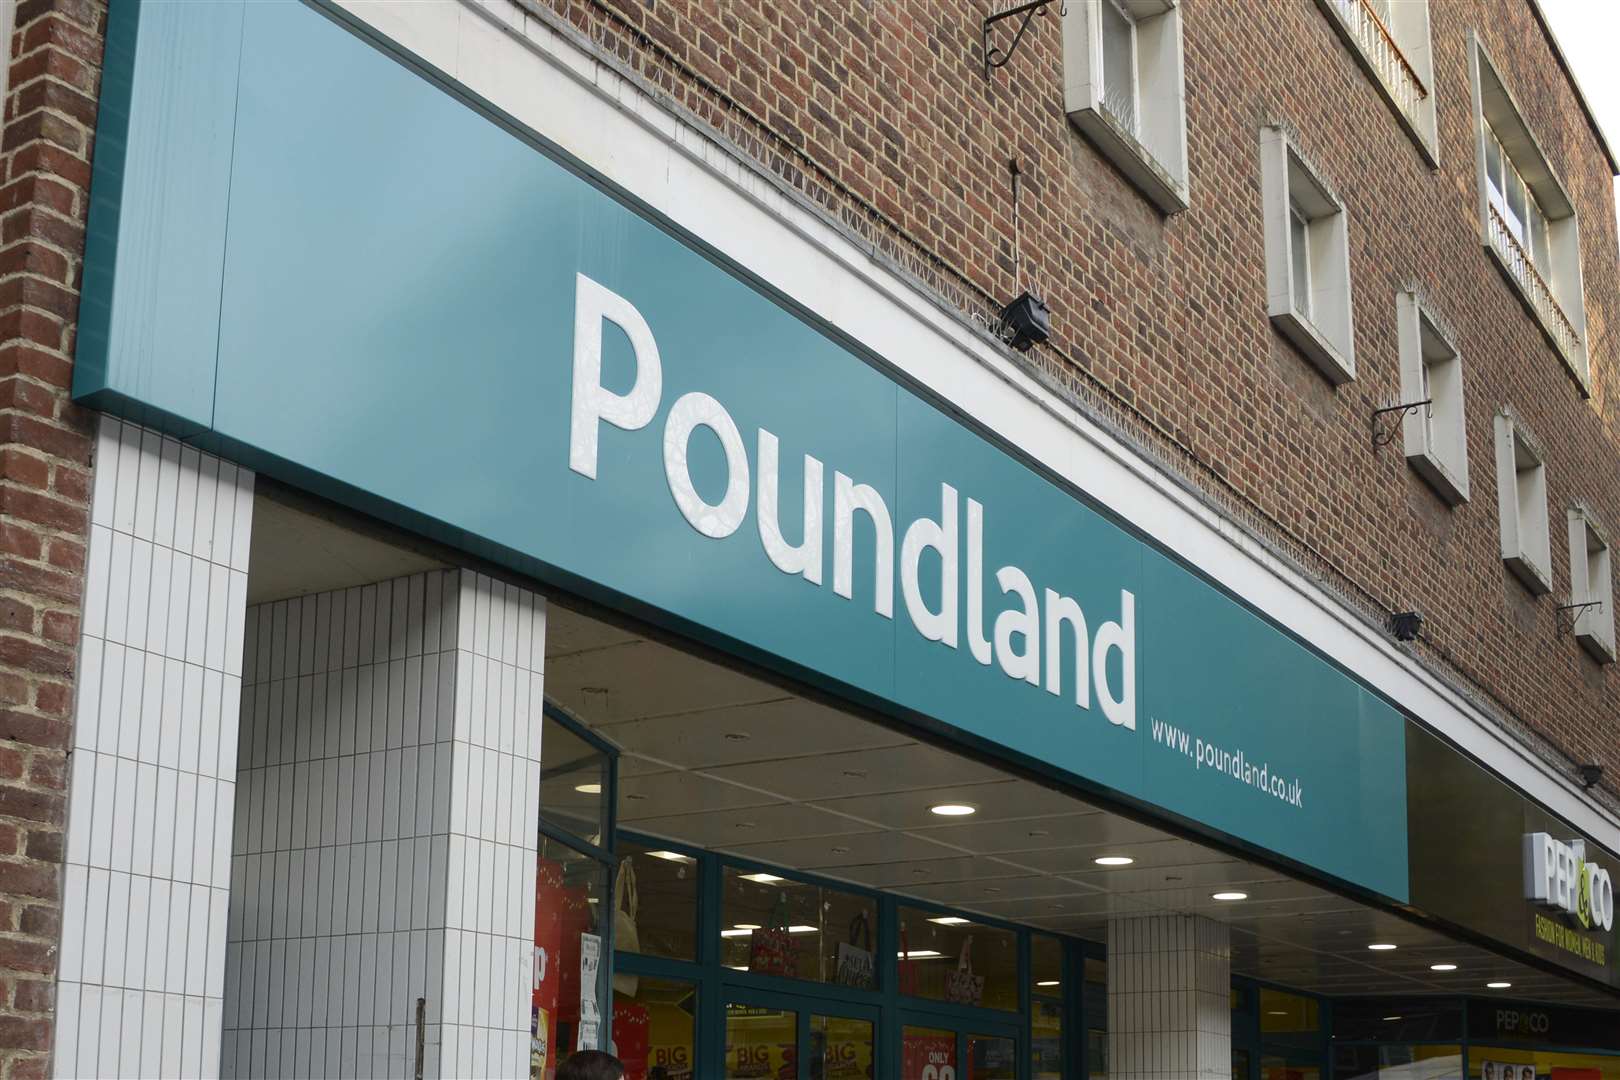 Canterbury's Poundland store